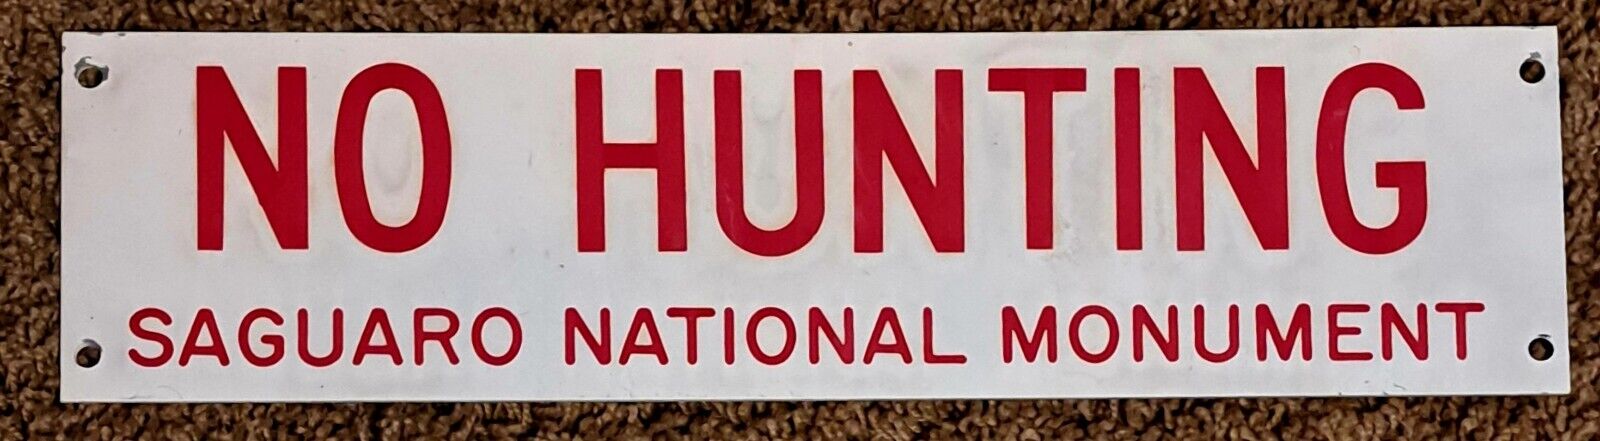 Vintage Saguaro National Monument No Hunting Sign